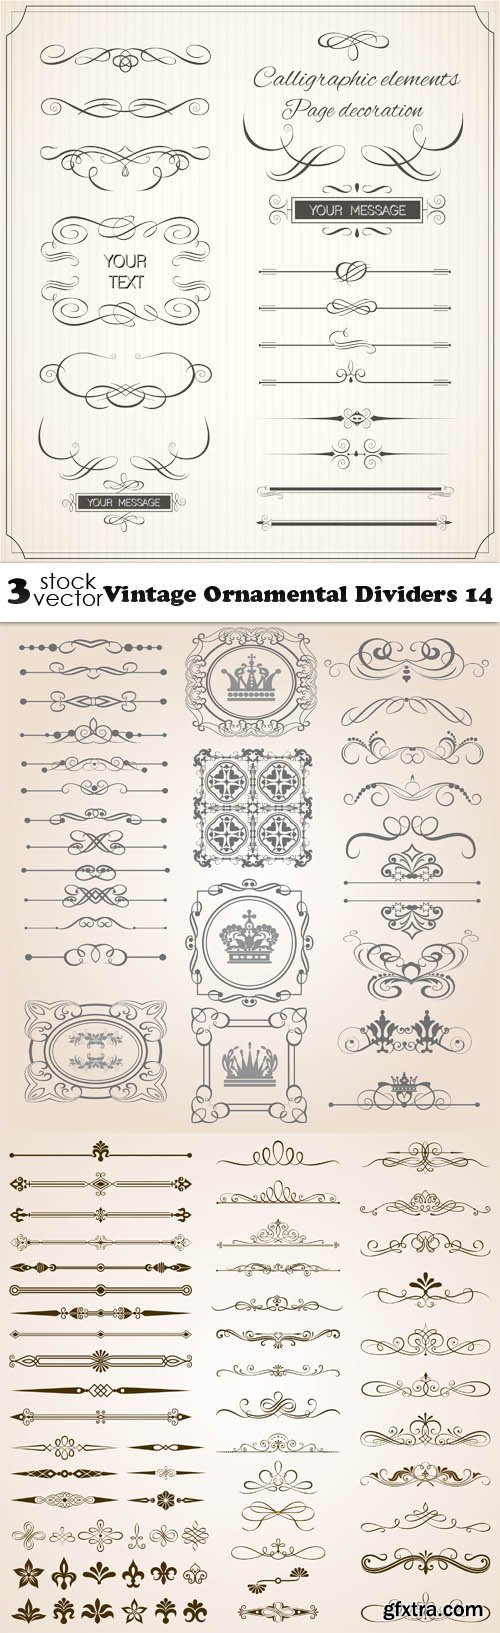 Vectors - Vintage Ornamental Dividers 14